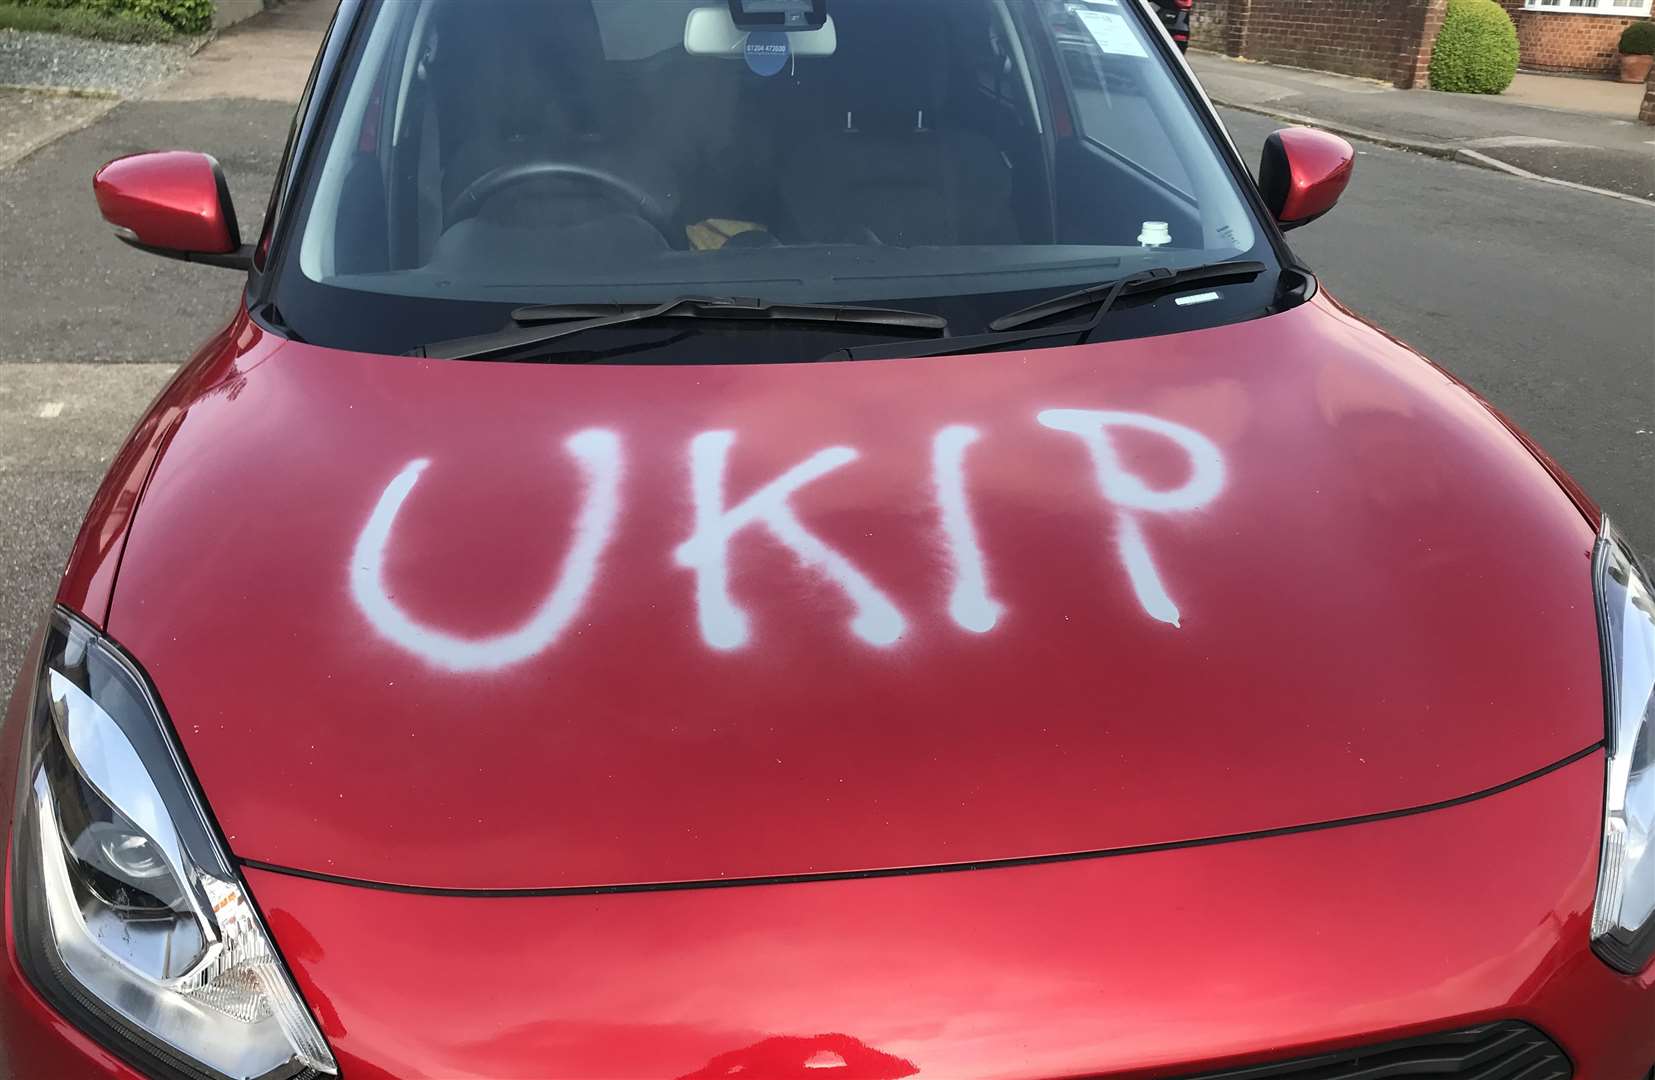 Vandalised: Liberal Democrat candidate Alexander Stennings' car this morning (9535784)